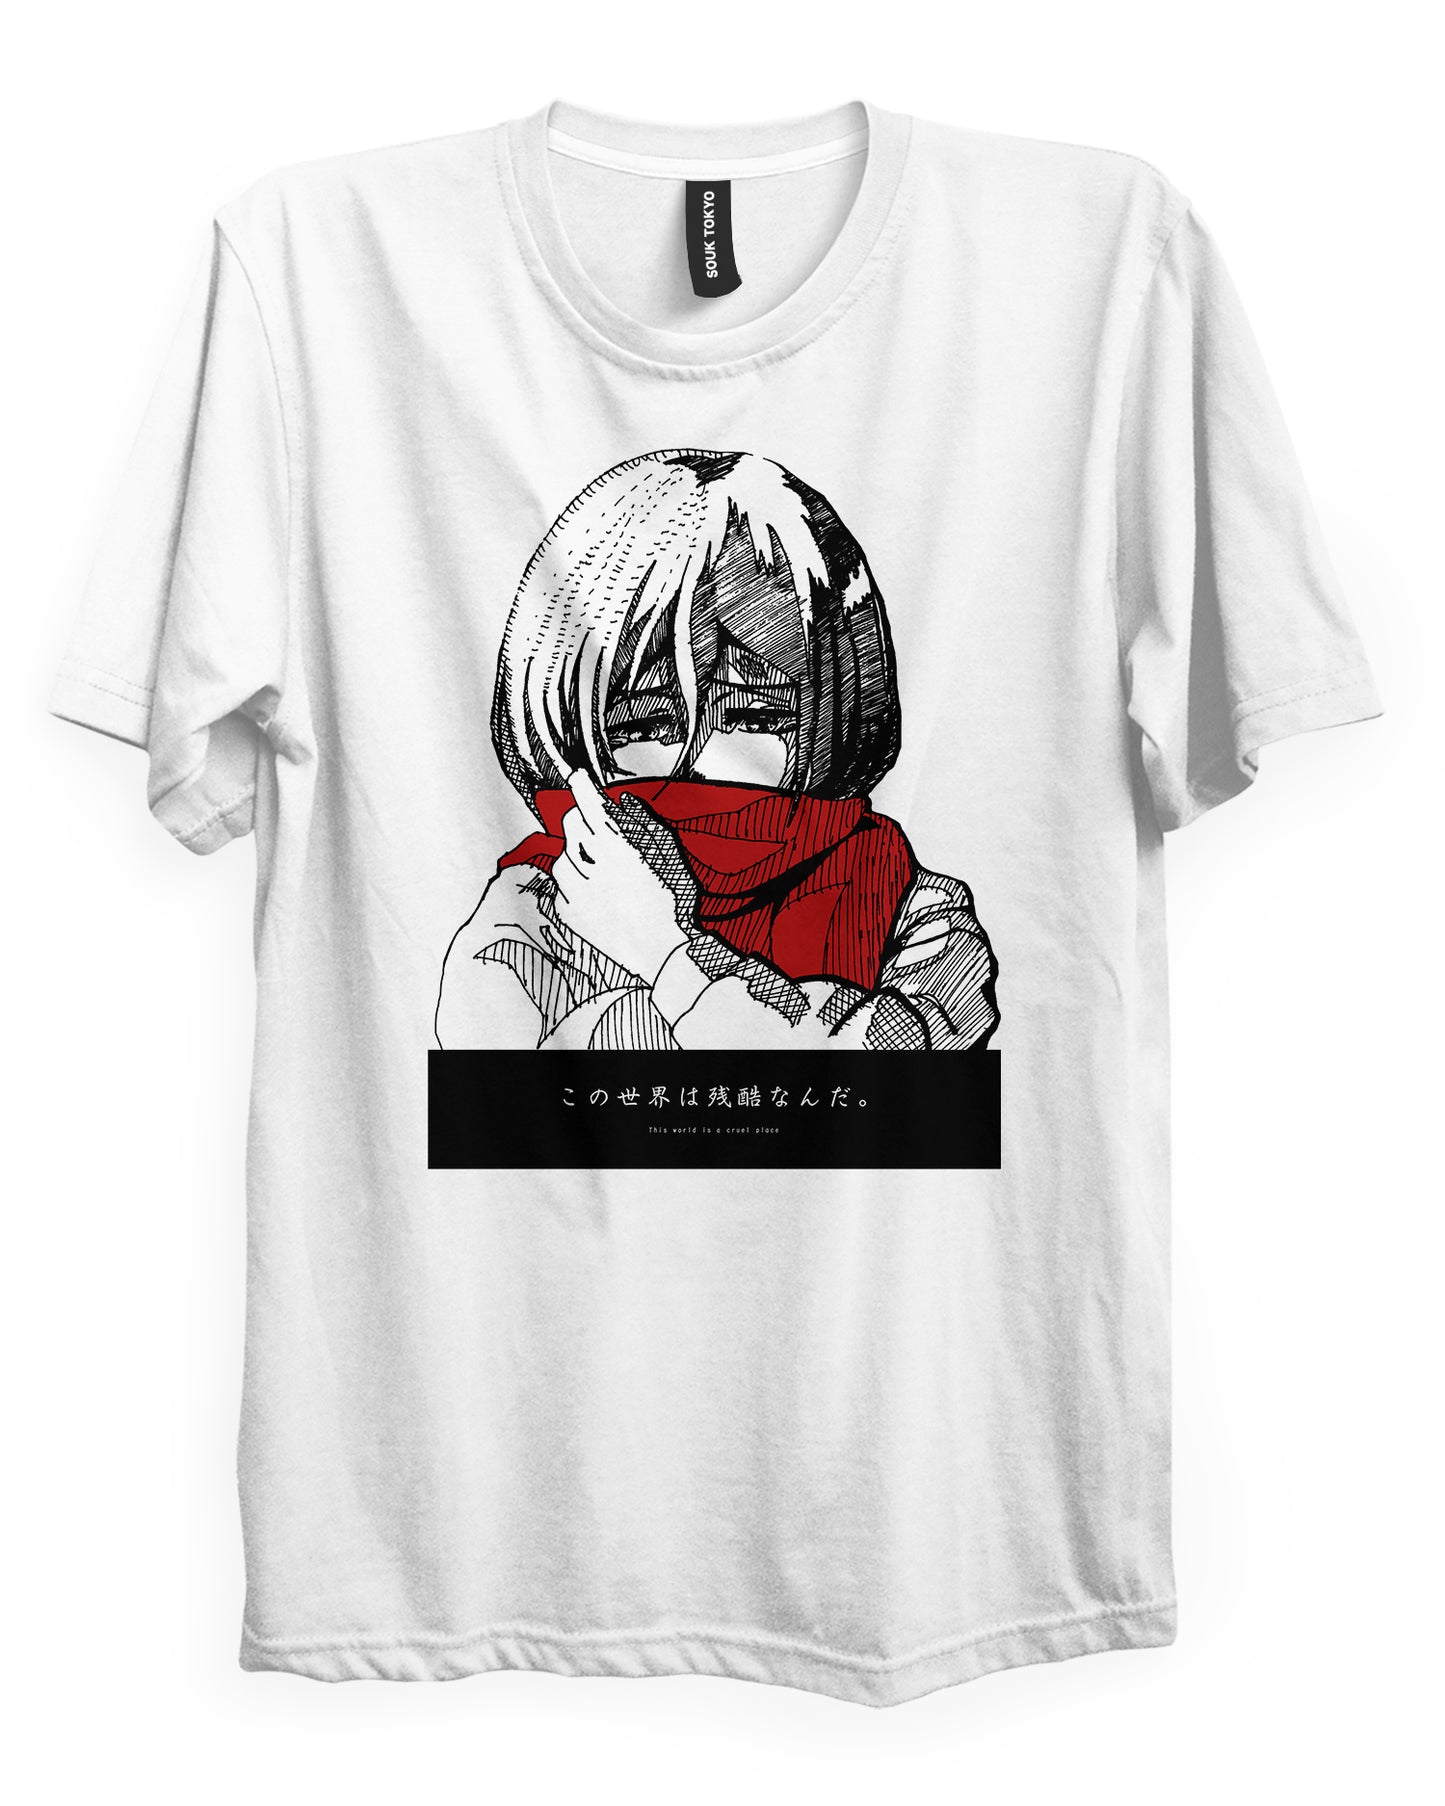 MIKASA (Cruel World) T-Shirt